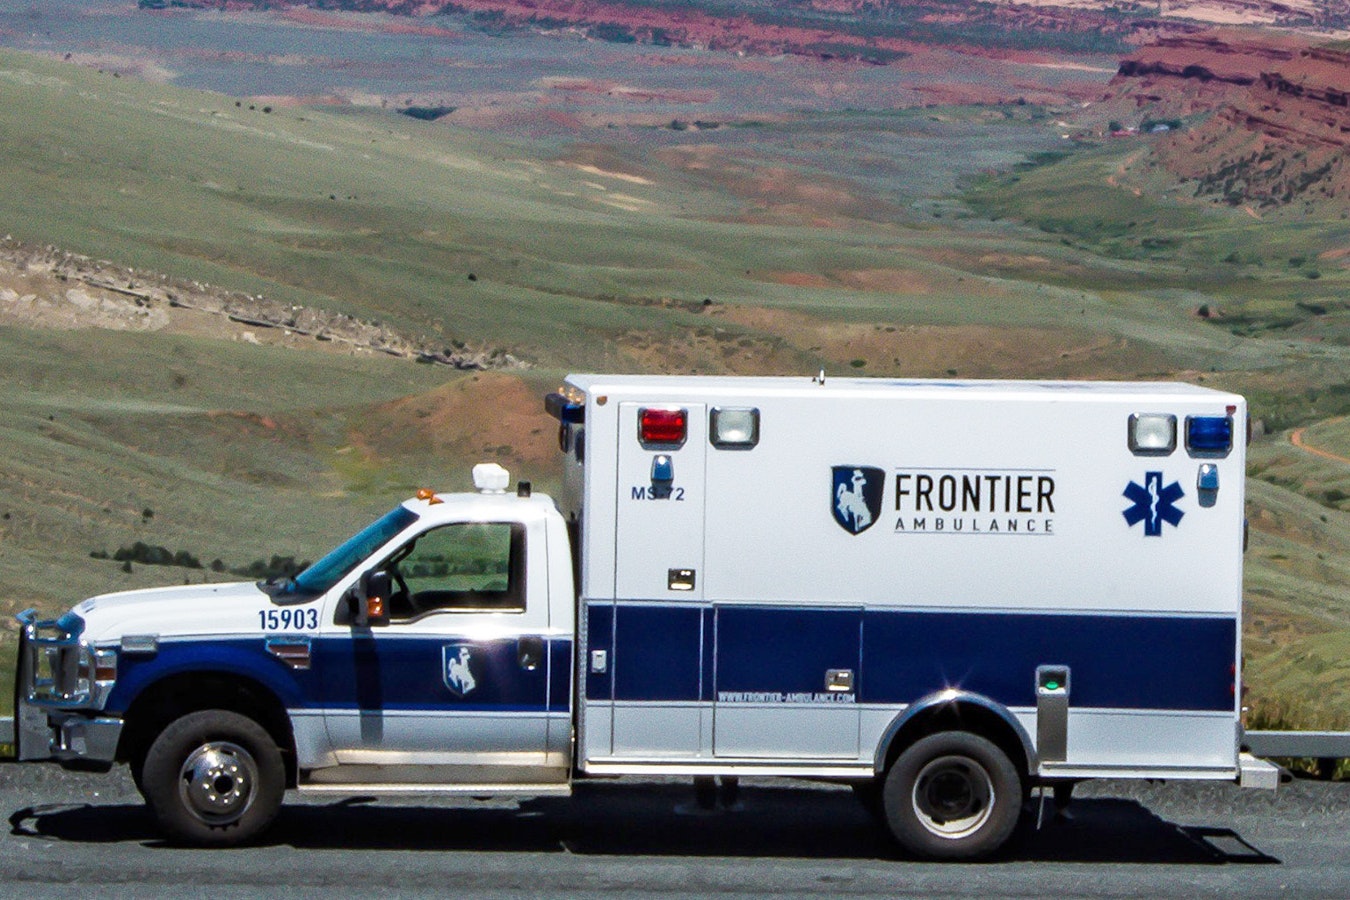 Frontier ambulance 9 25 23